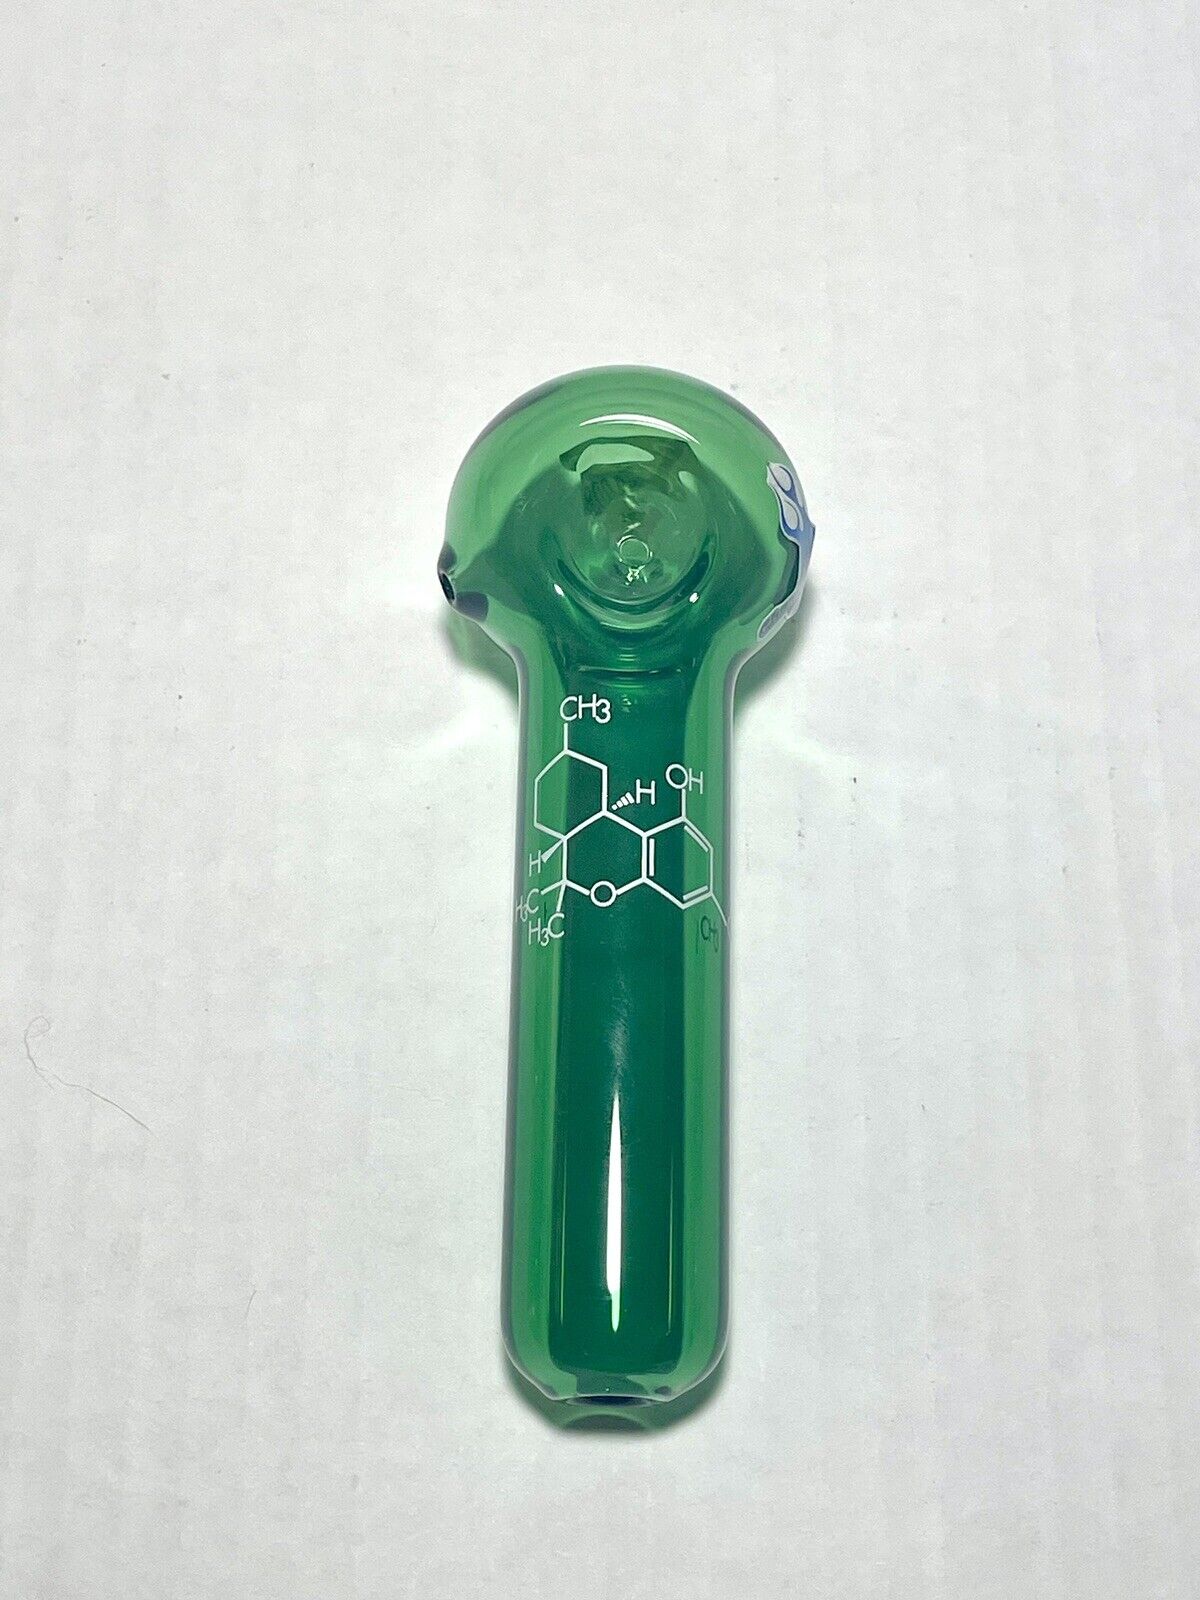 Chameleon Glass Organic Chemistry Green Molecule Tobacco Hand Pipe Spoon